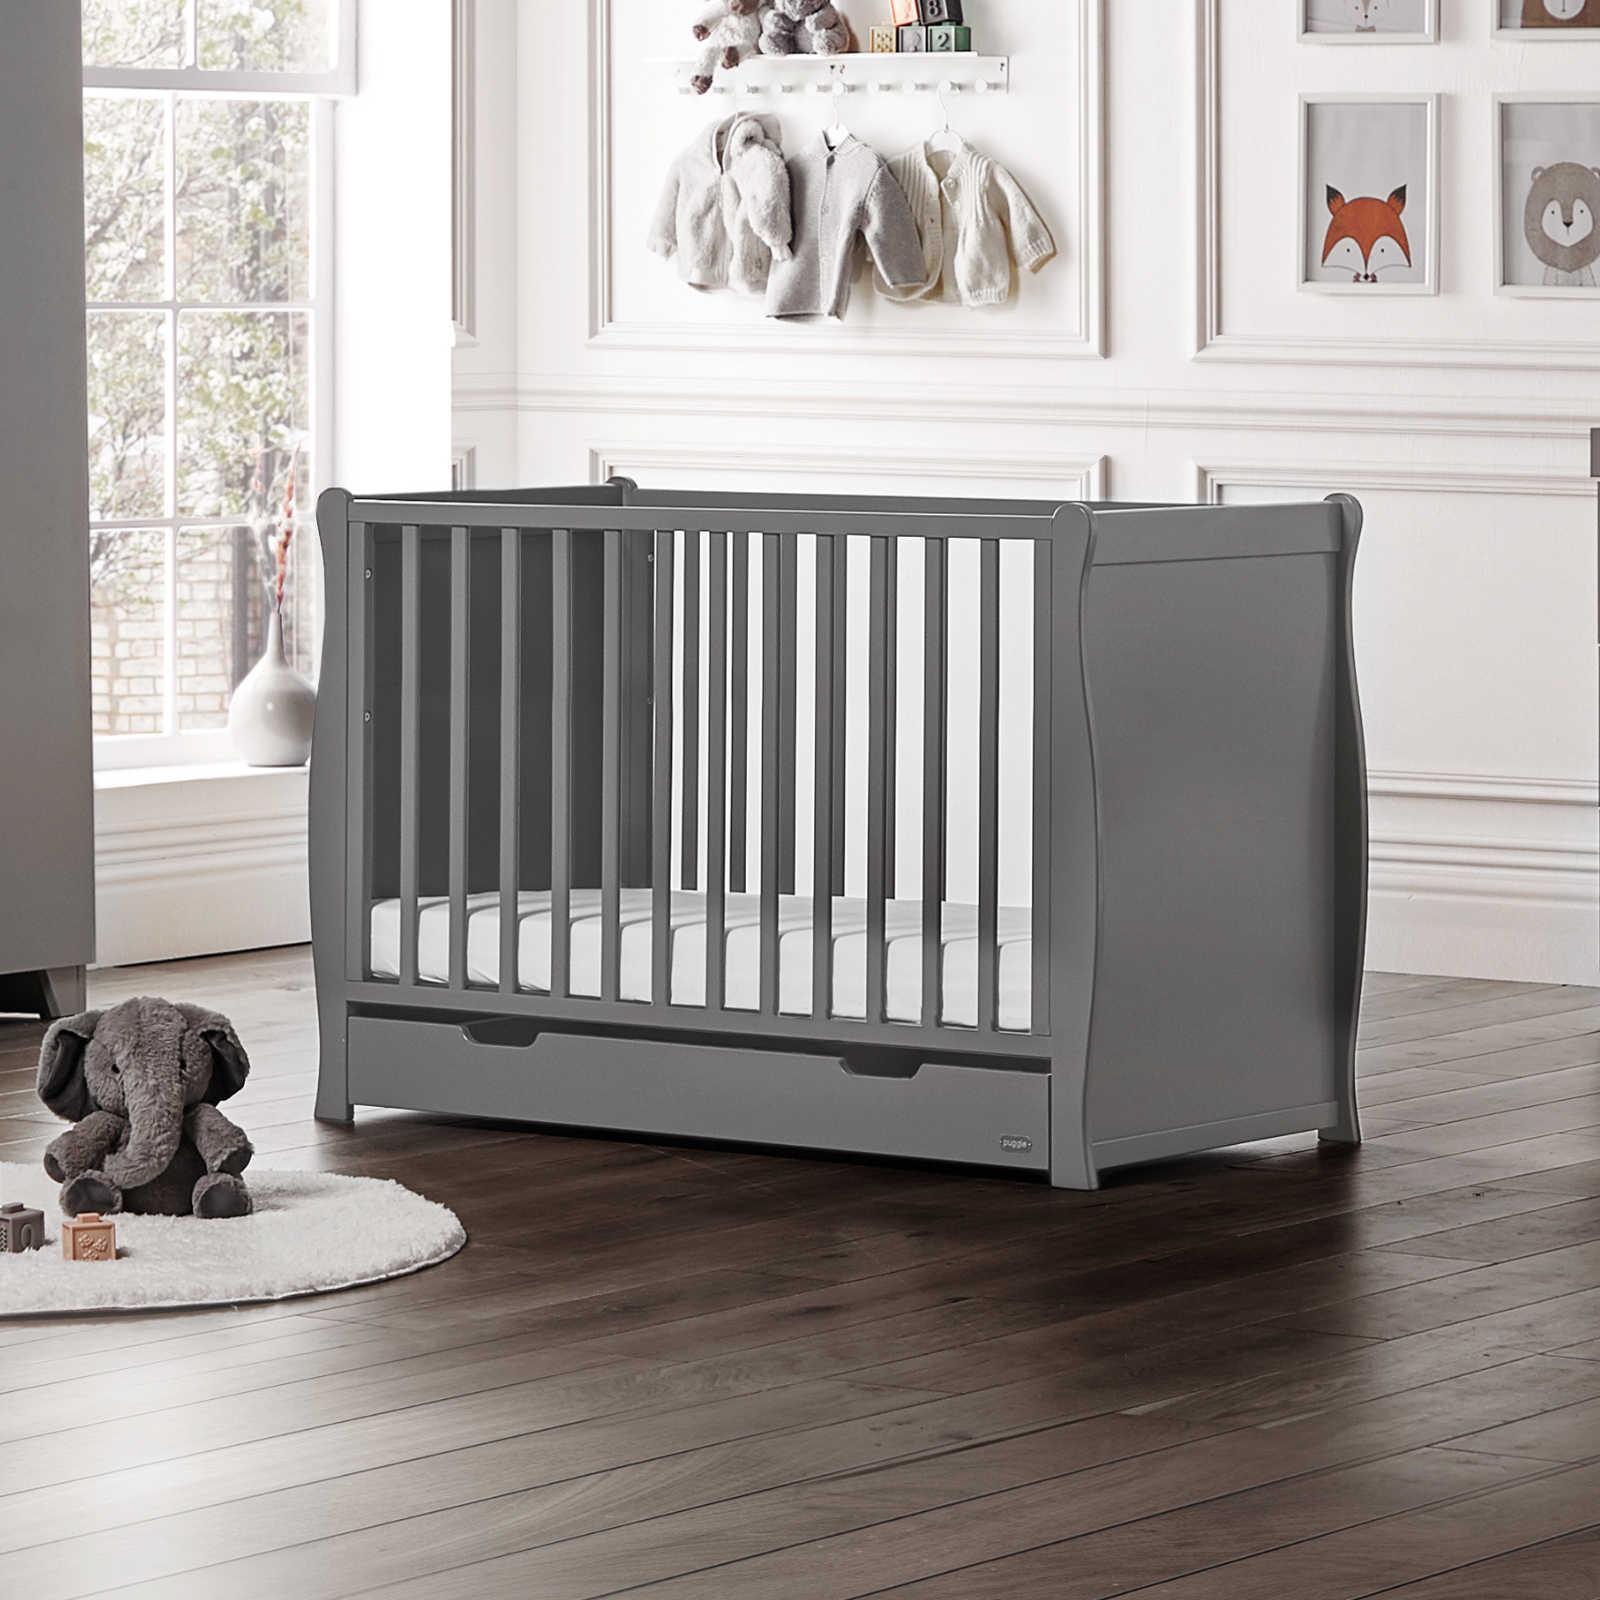 Puggle Chelford Sleigh Cot 3pc Nursery Furniture Set with Drawer & Maxi Air Cool Mattress - Grey